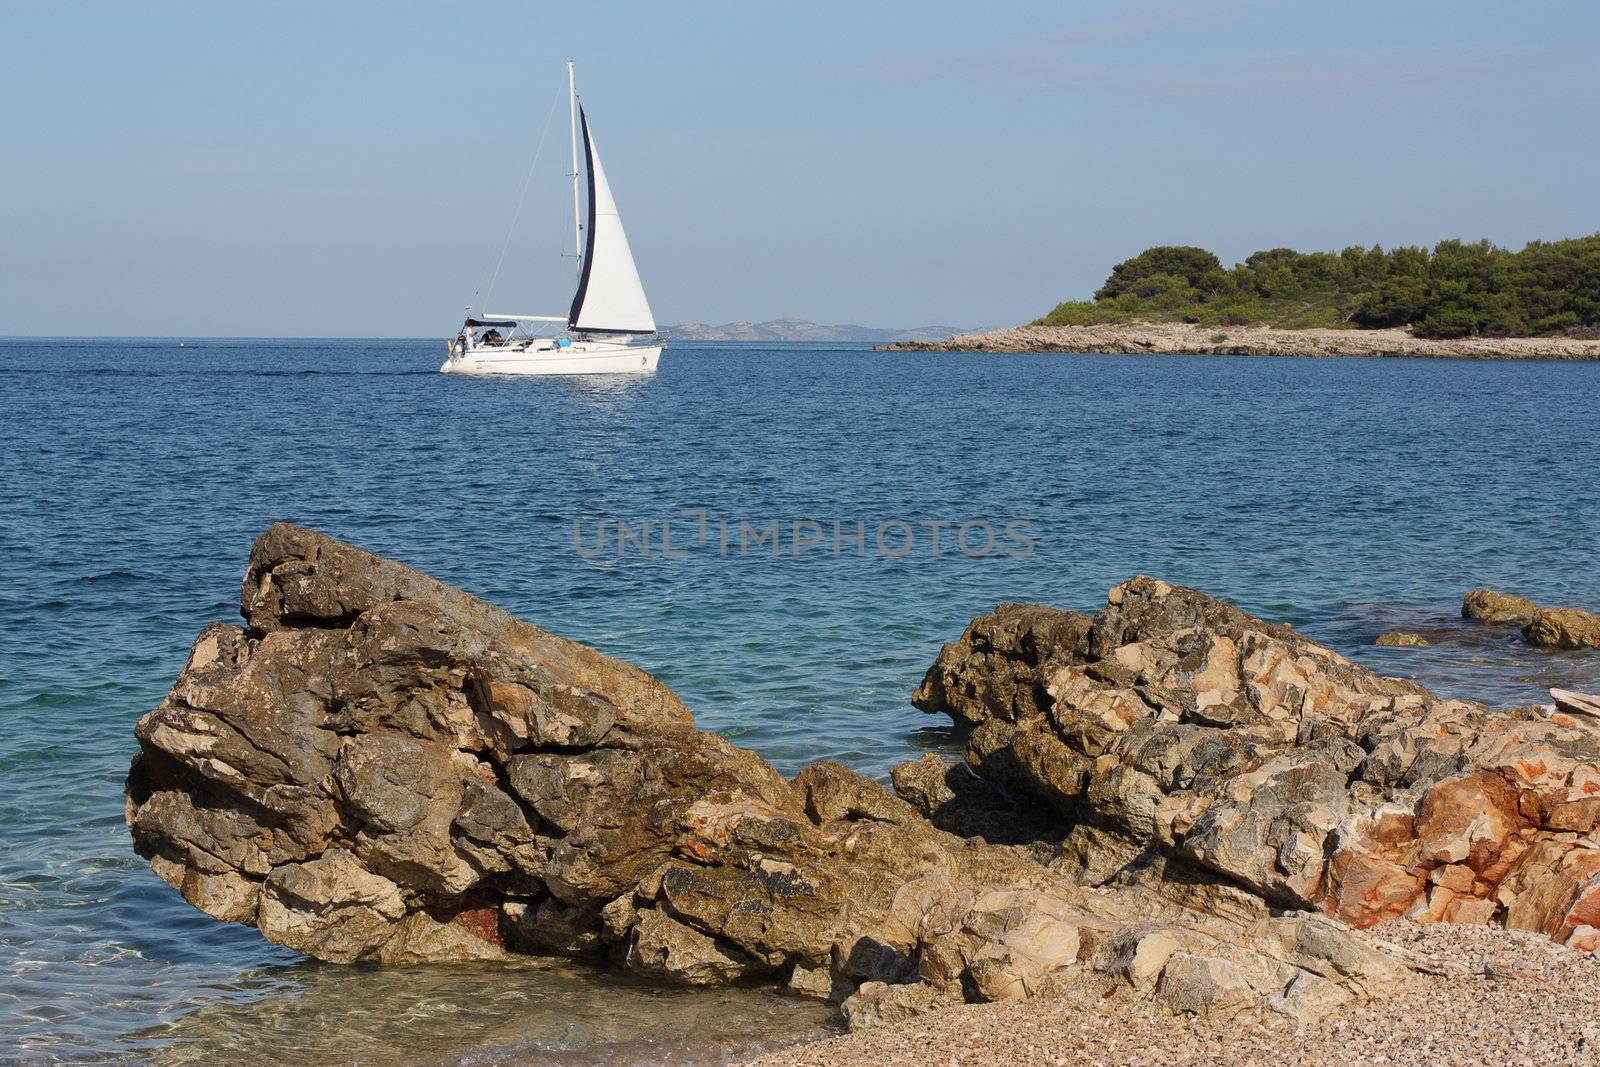 Dalmatian seascape with a yacht sailing
